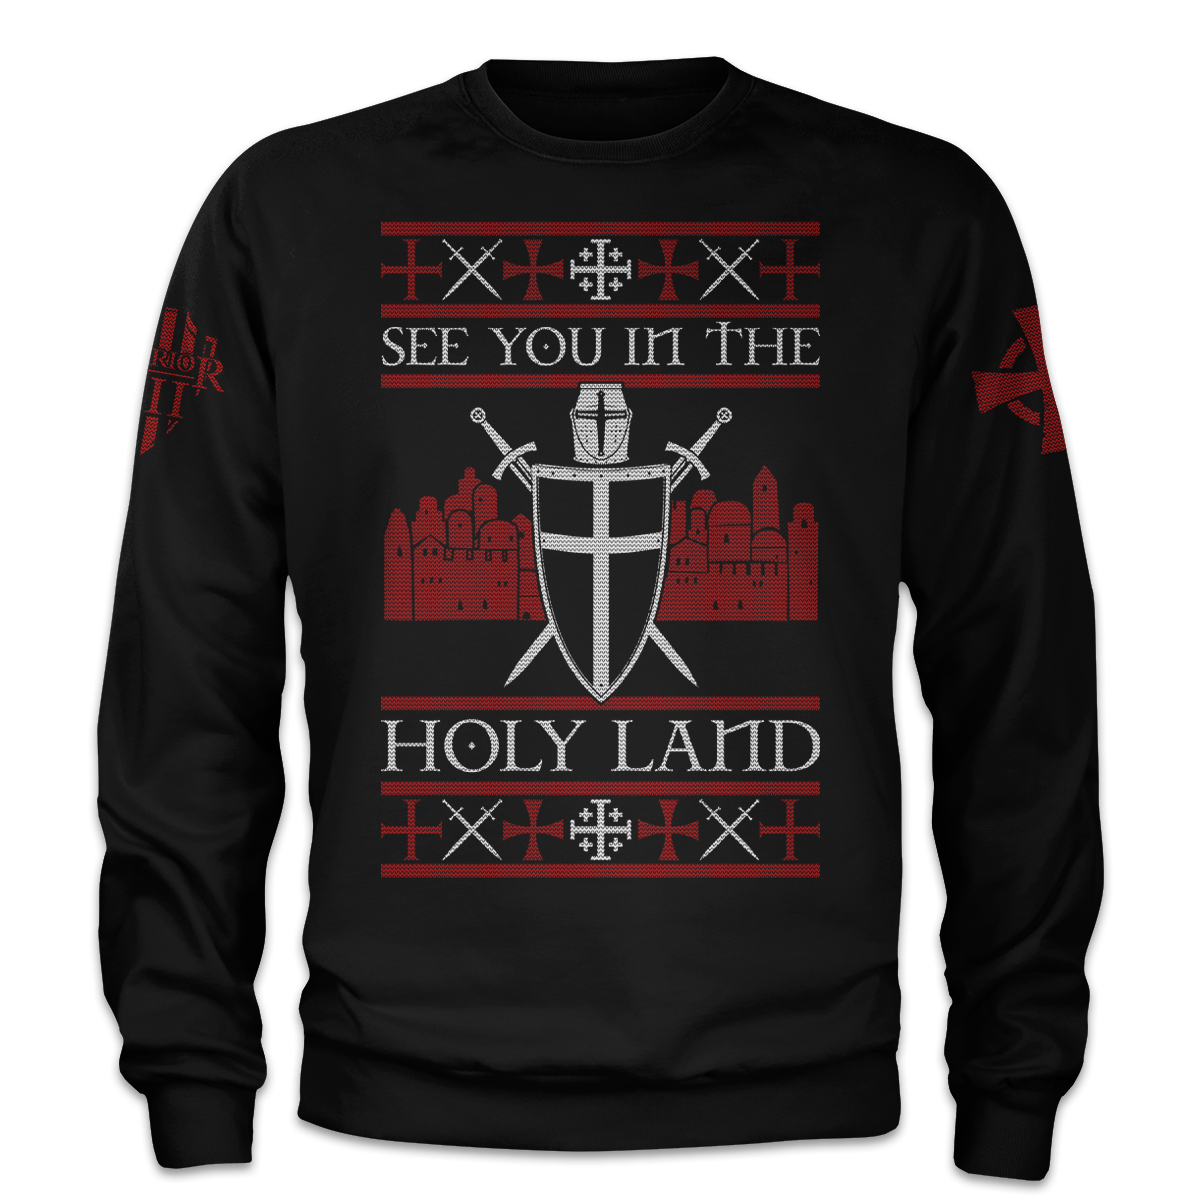 Crusader Christmas Sweater  Warrior 12-4890